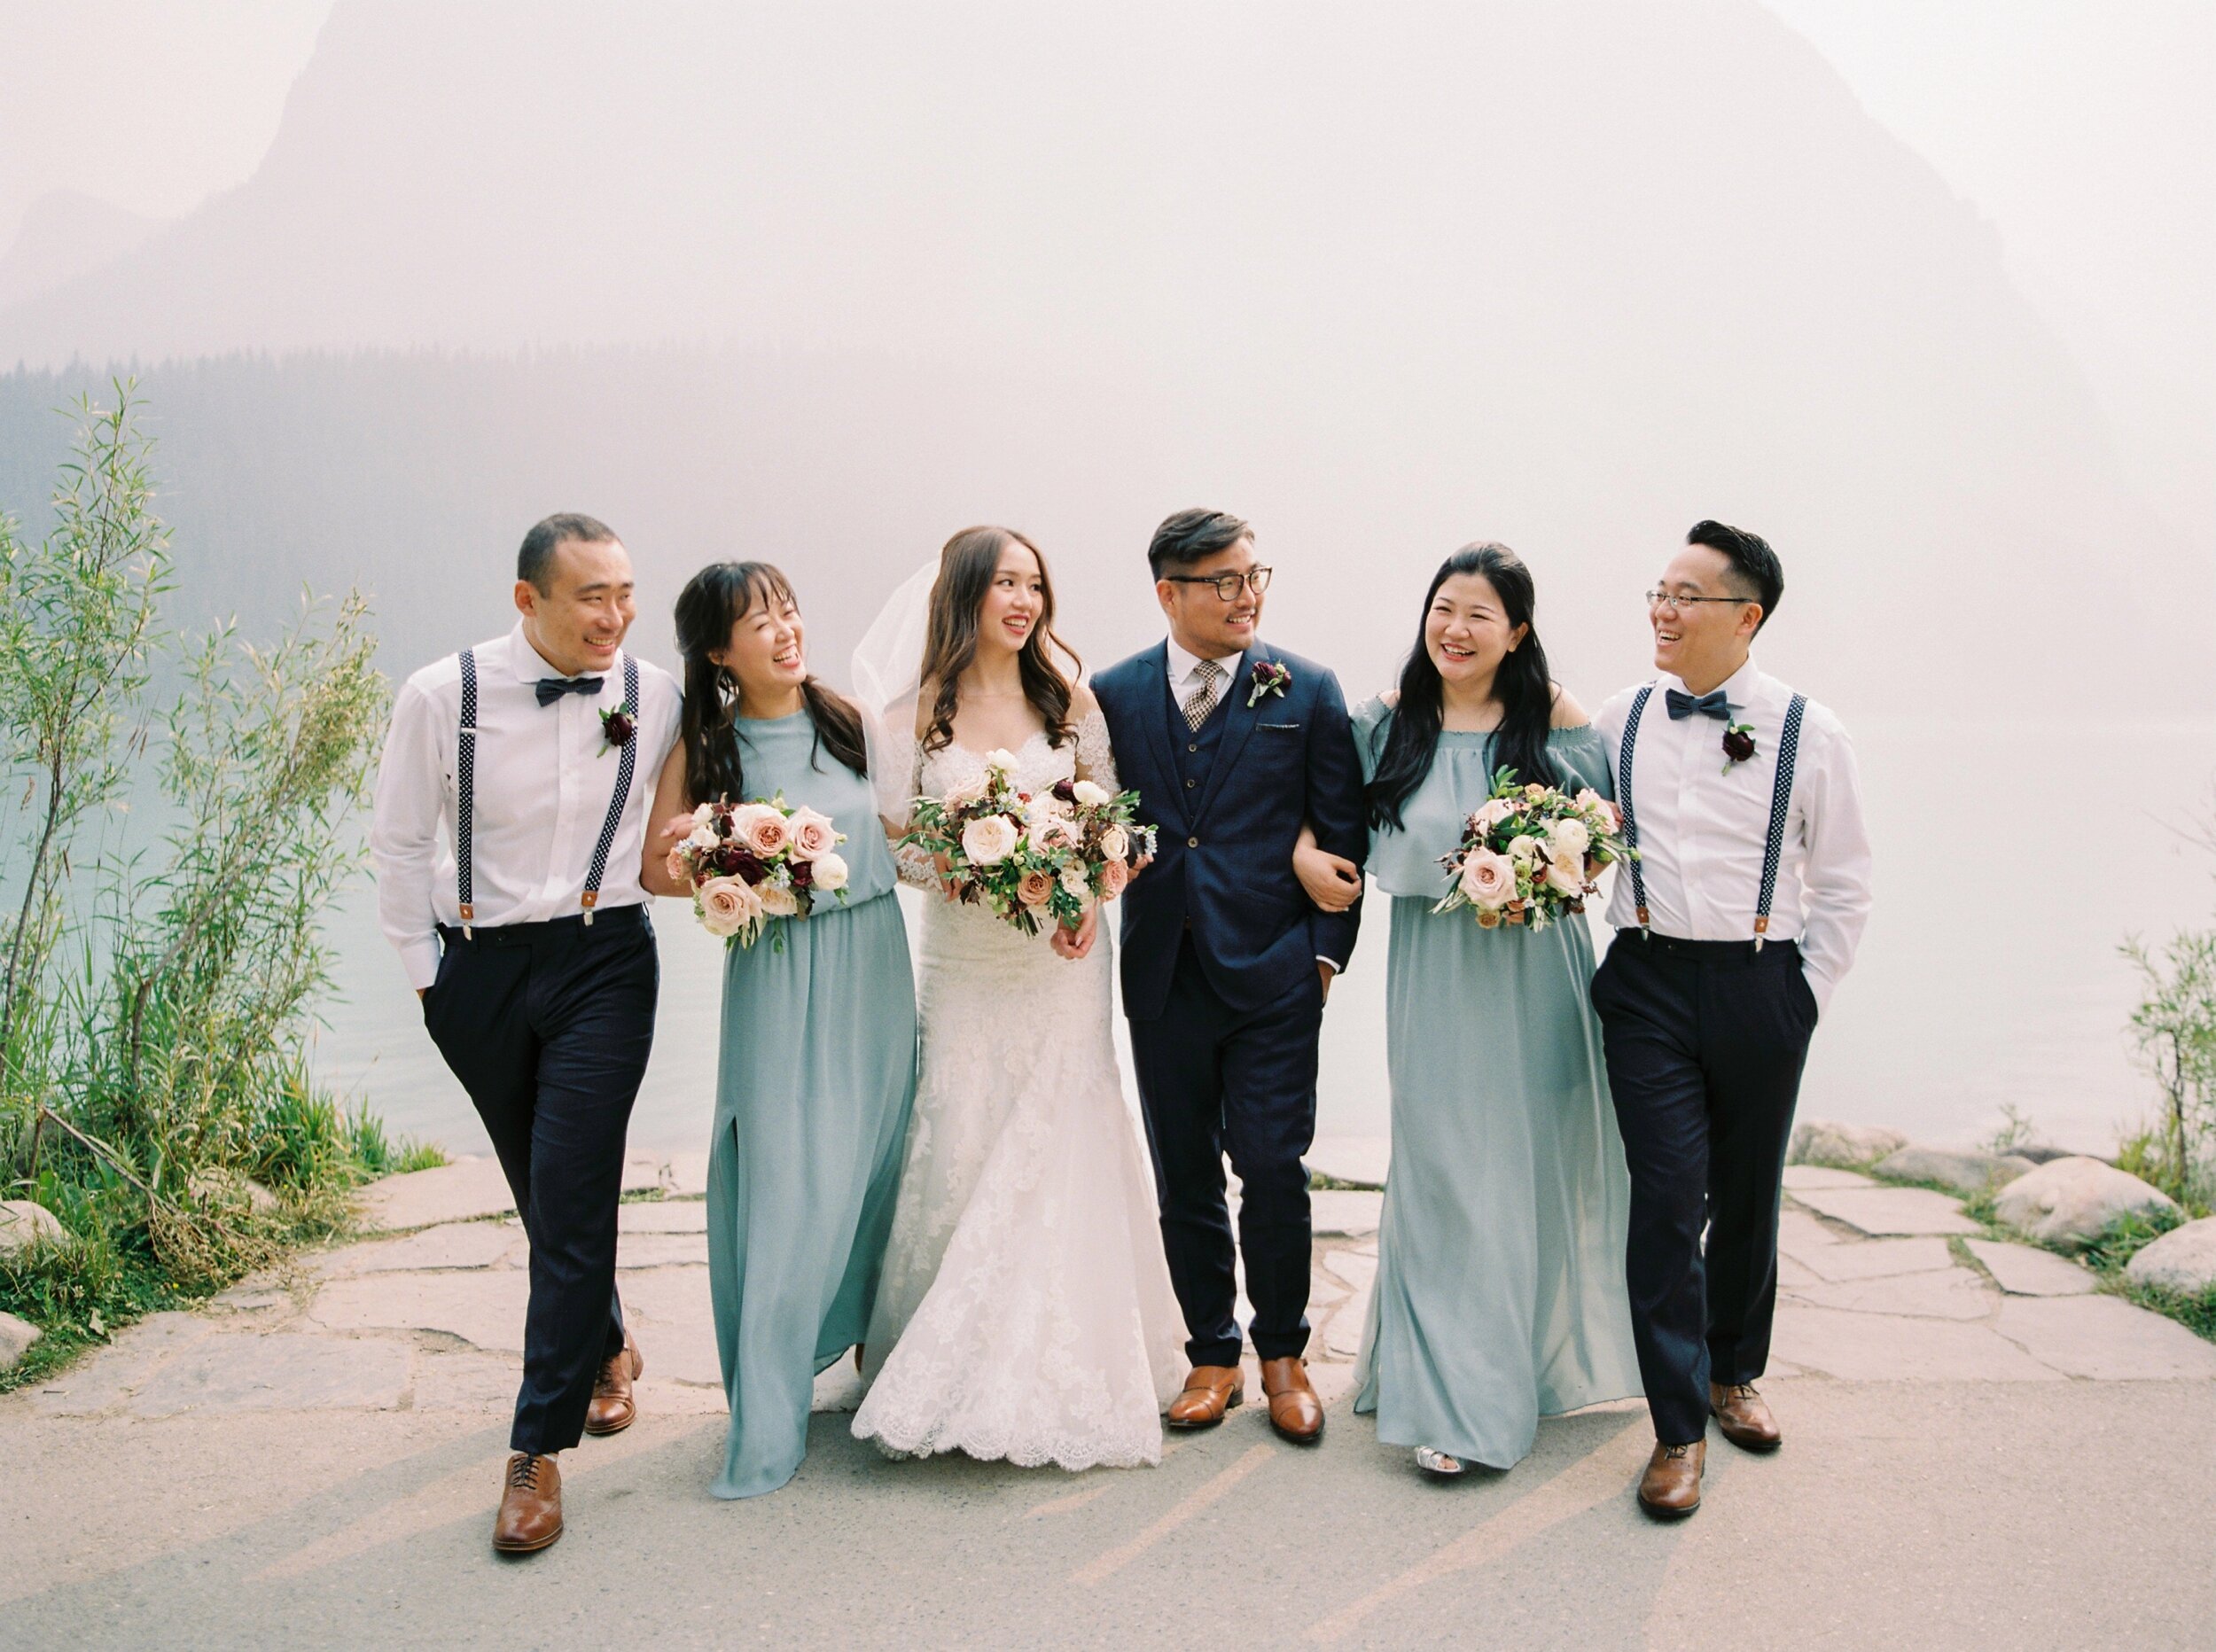  Lake Louise wedding photographers | Justine milton photography | fine art film destination wedding photographer | fairmont chateau lake louise wedding party portrait 